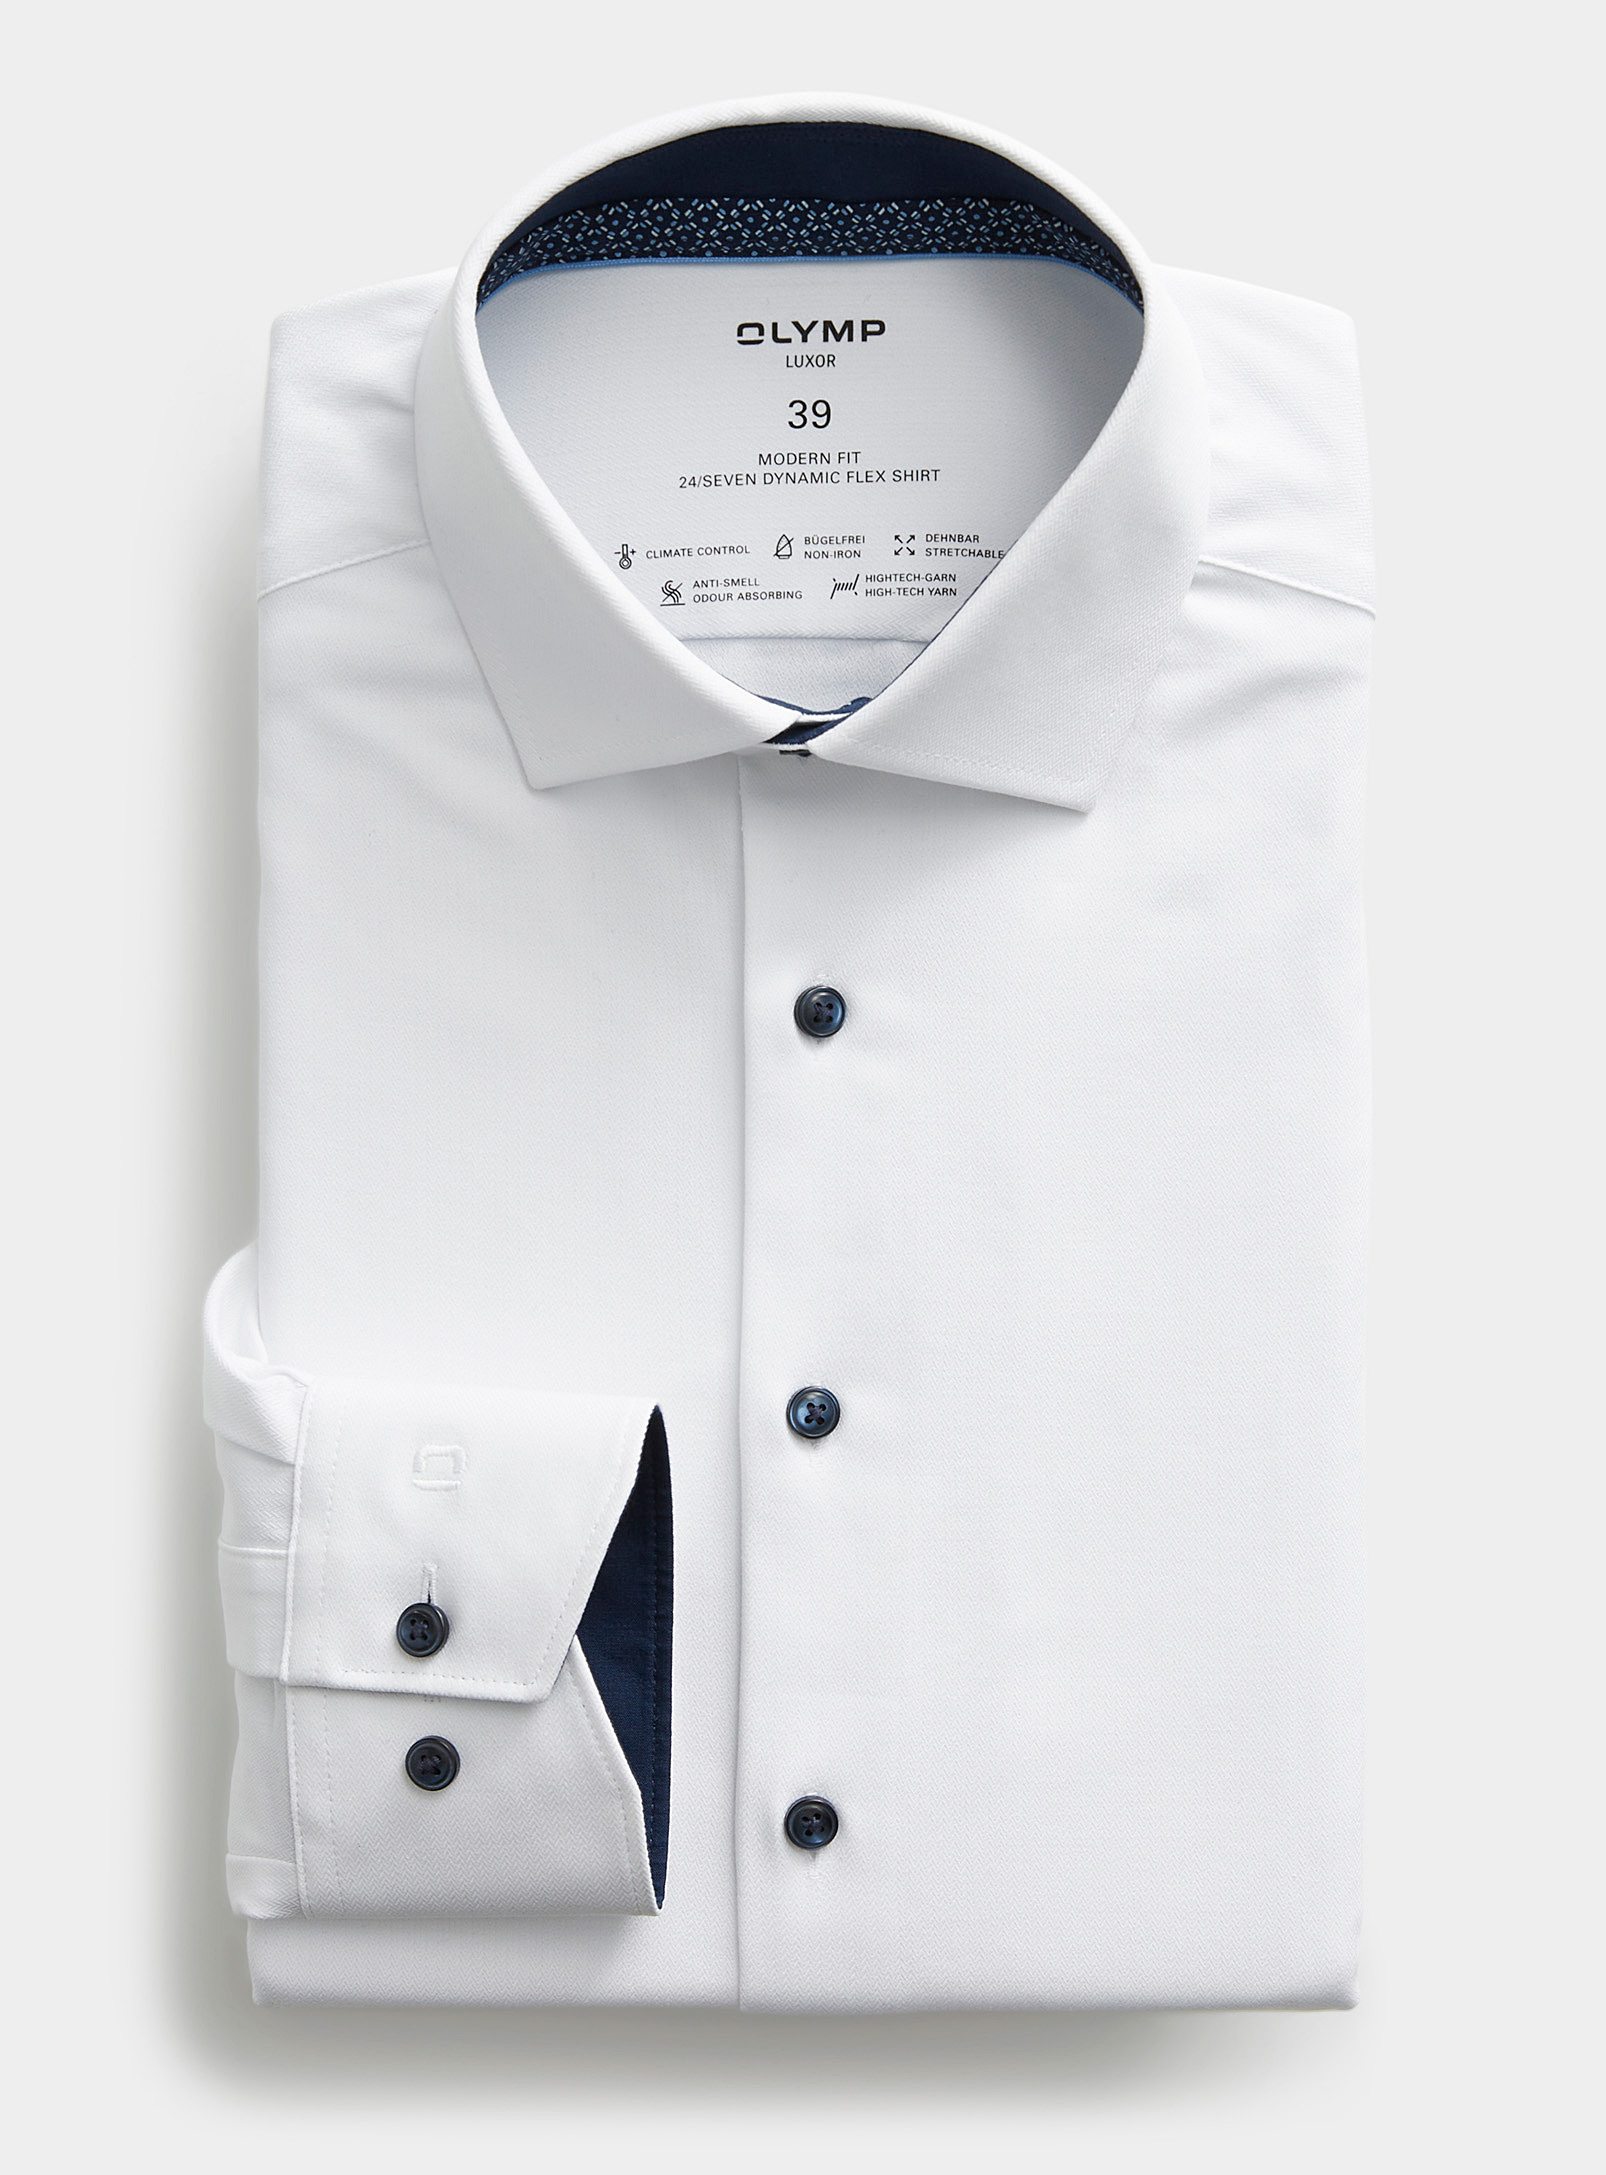 Olymp - La chemise blanche chevrons jacquard Coupe confort